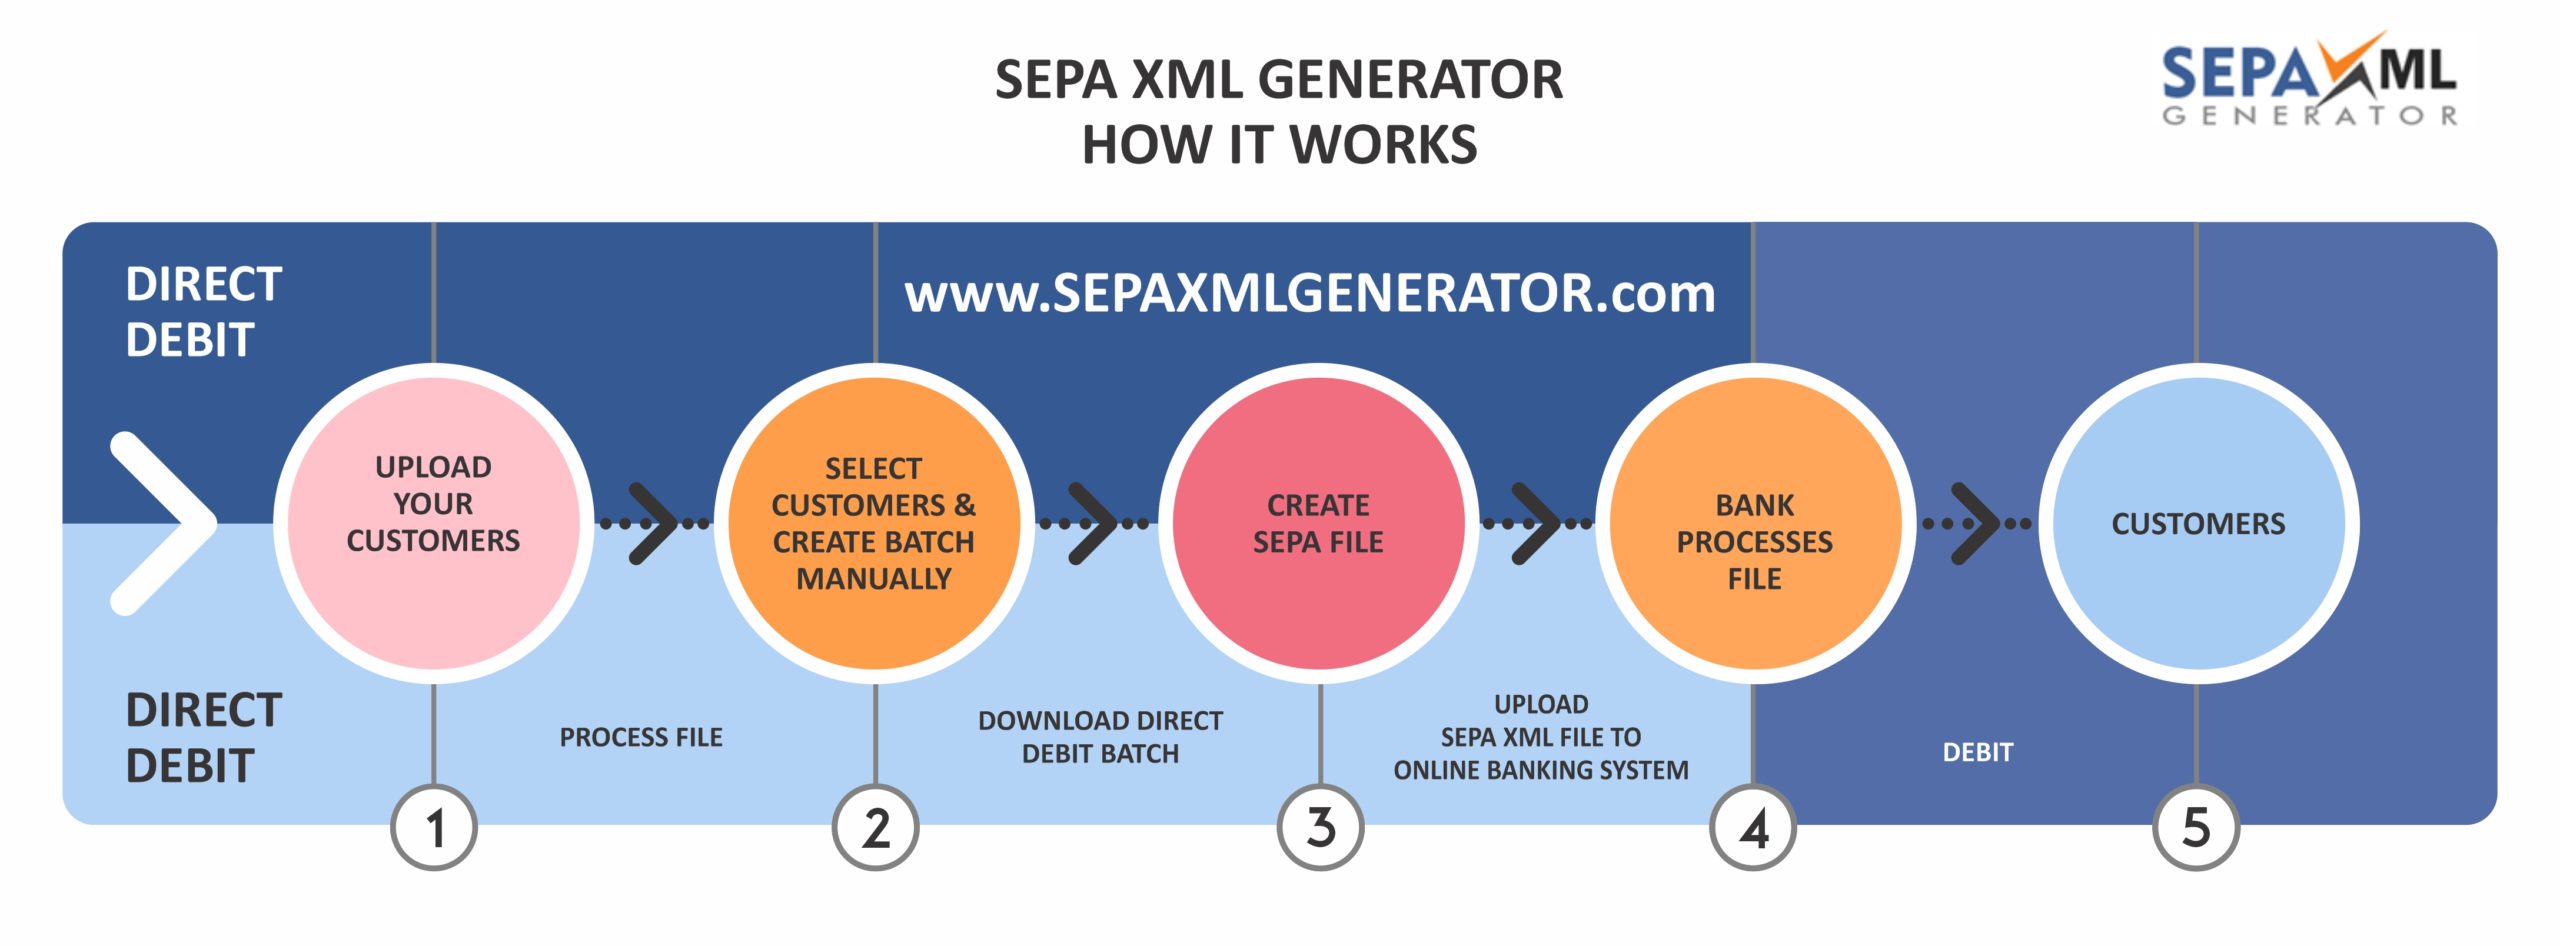 UX Design Flow - SEPA XML GENERATOR